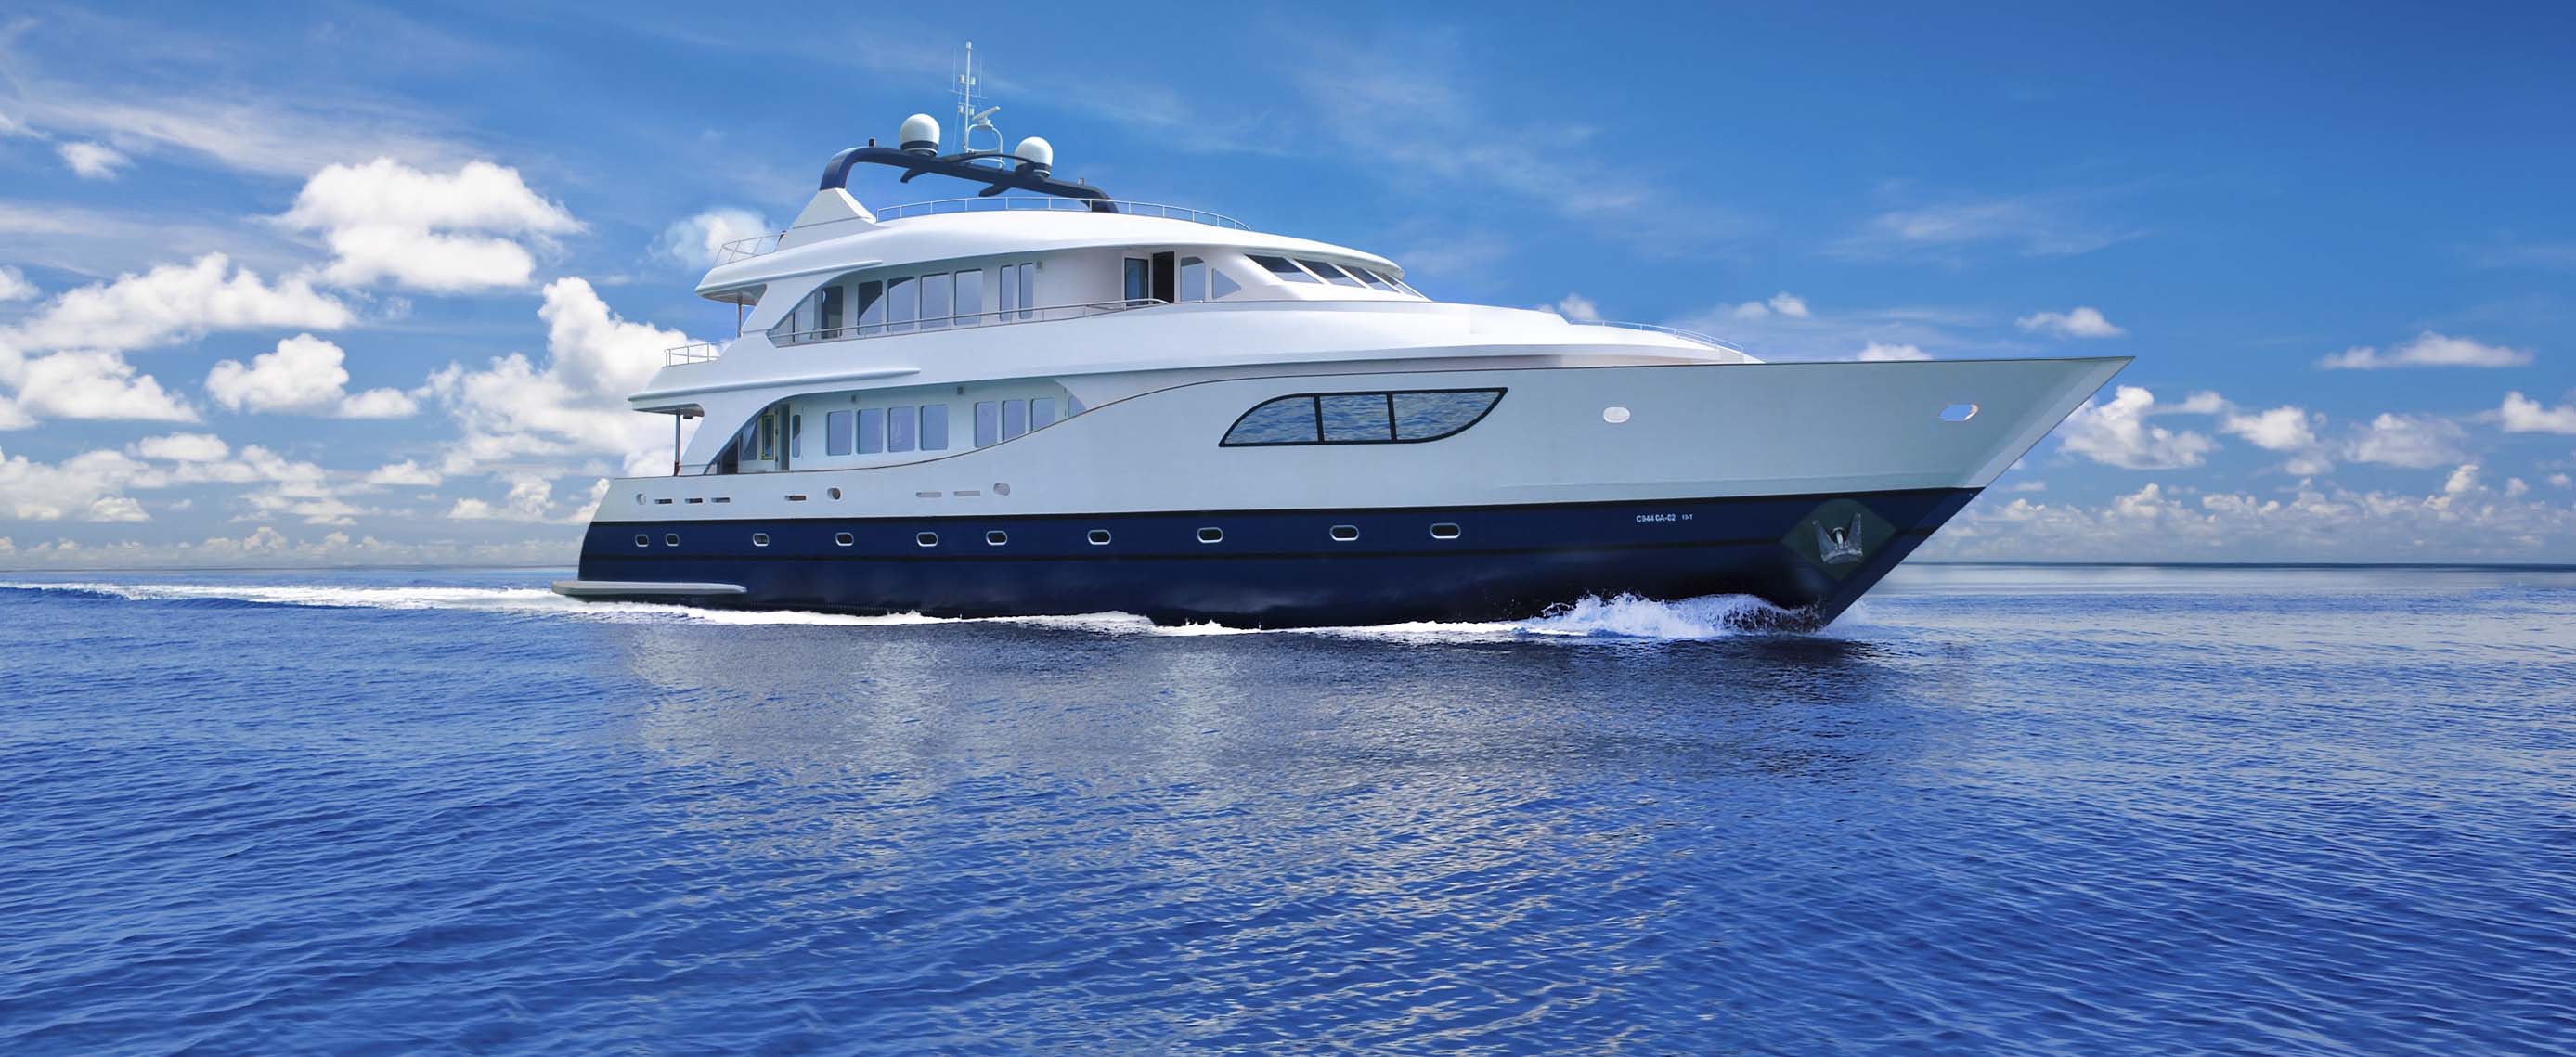 Yacht HONORS LEGACY Maldives Luxury Yacht